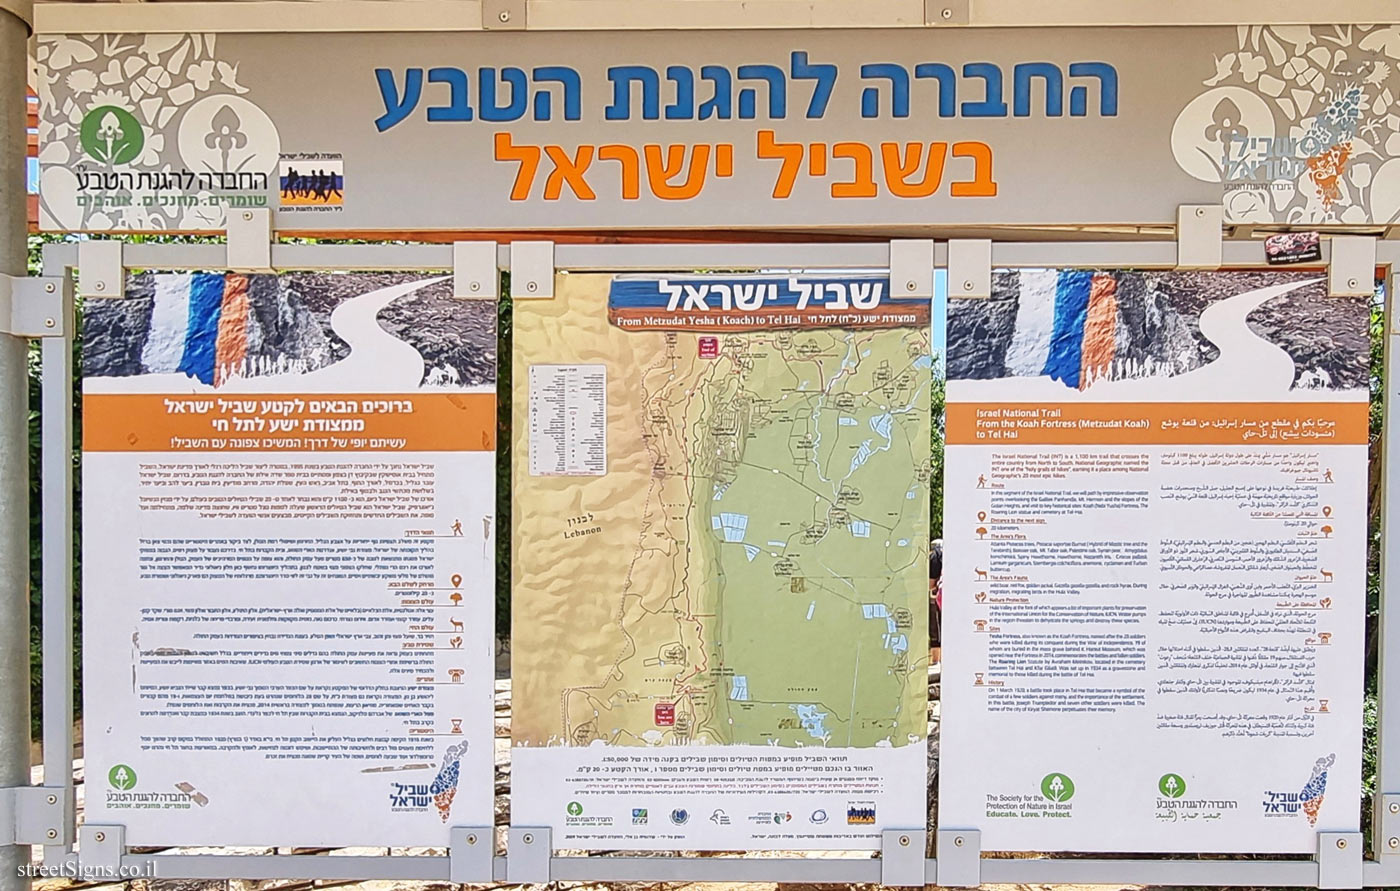 Israel National Trail - From Metzudat Yesha (Koach) to Tel Hai